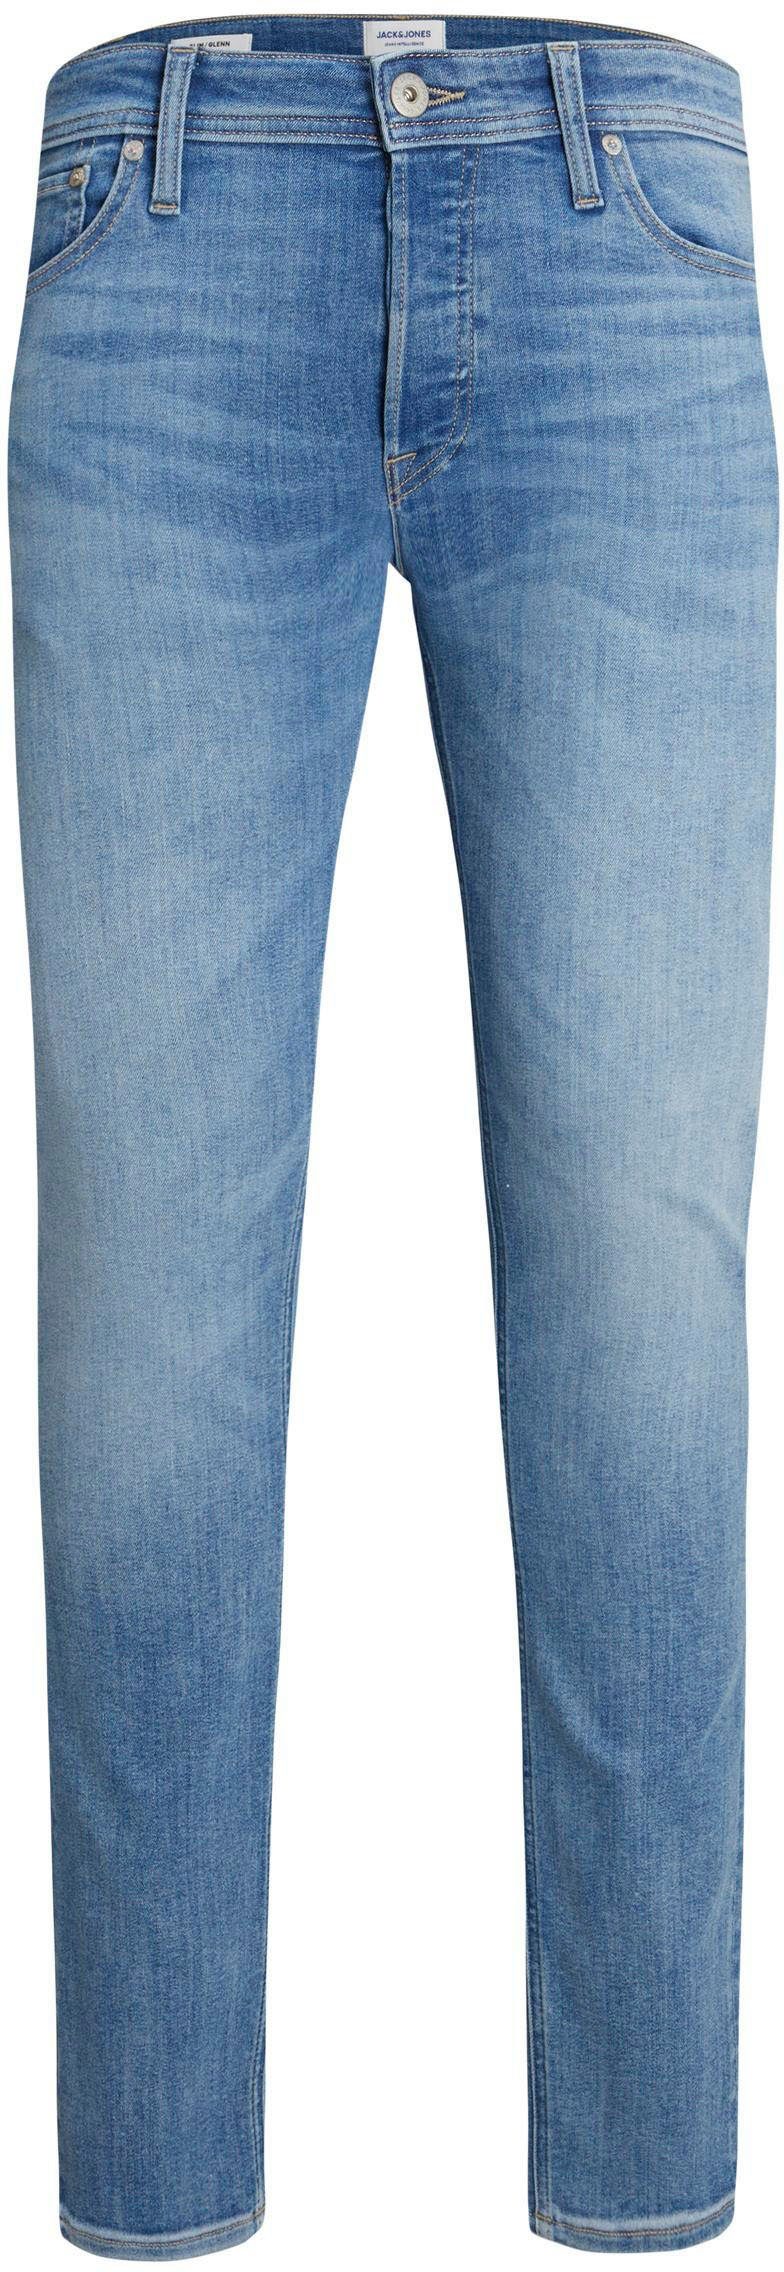 Jack & Jones Skinny-fit-Jeans JJILIAM JJORIGINAL light-blue-denim 314 GE